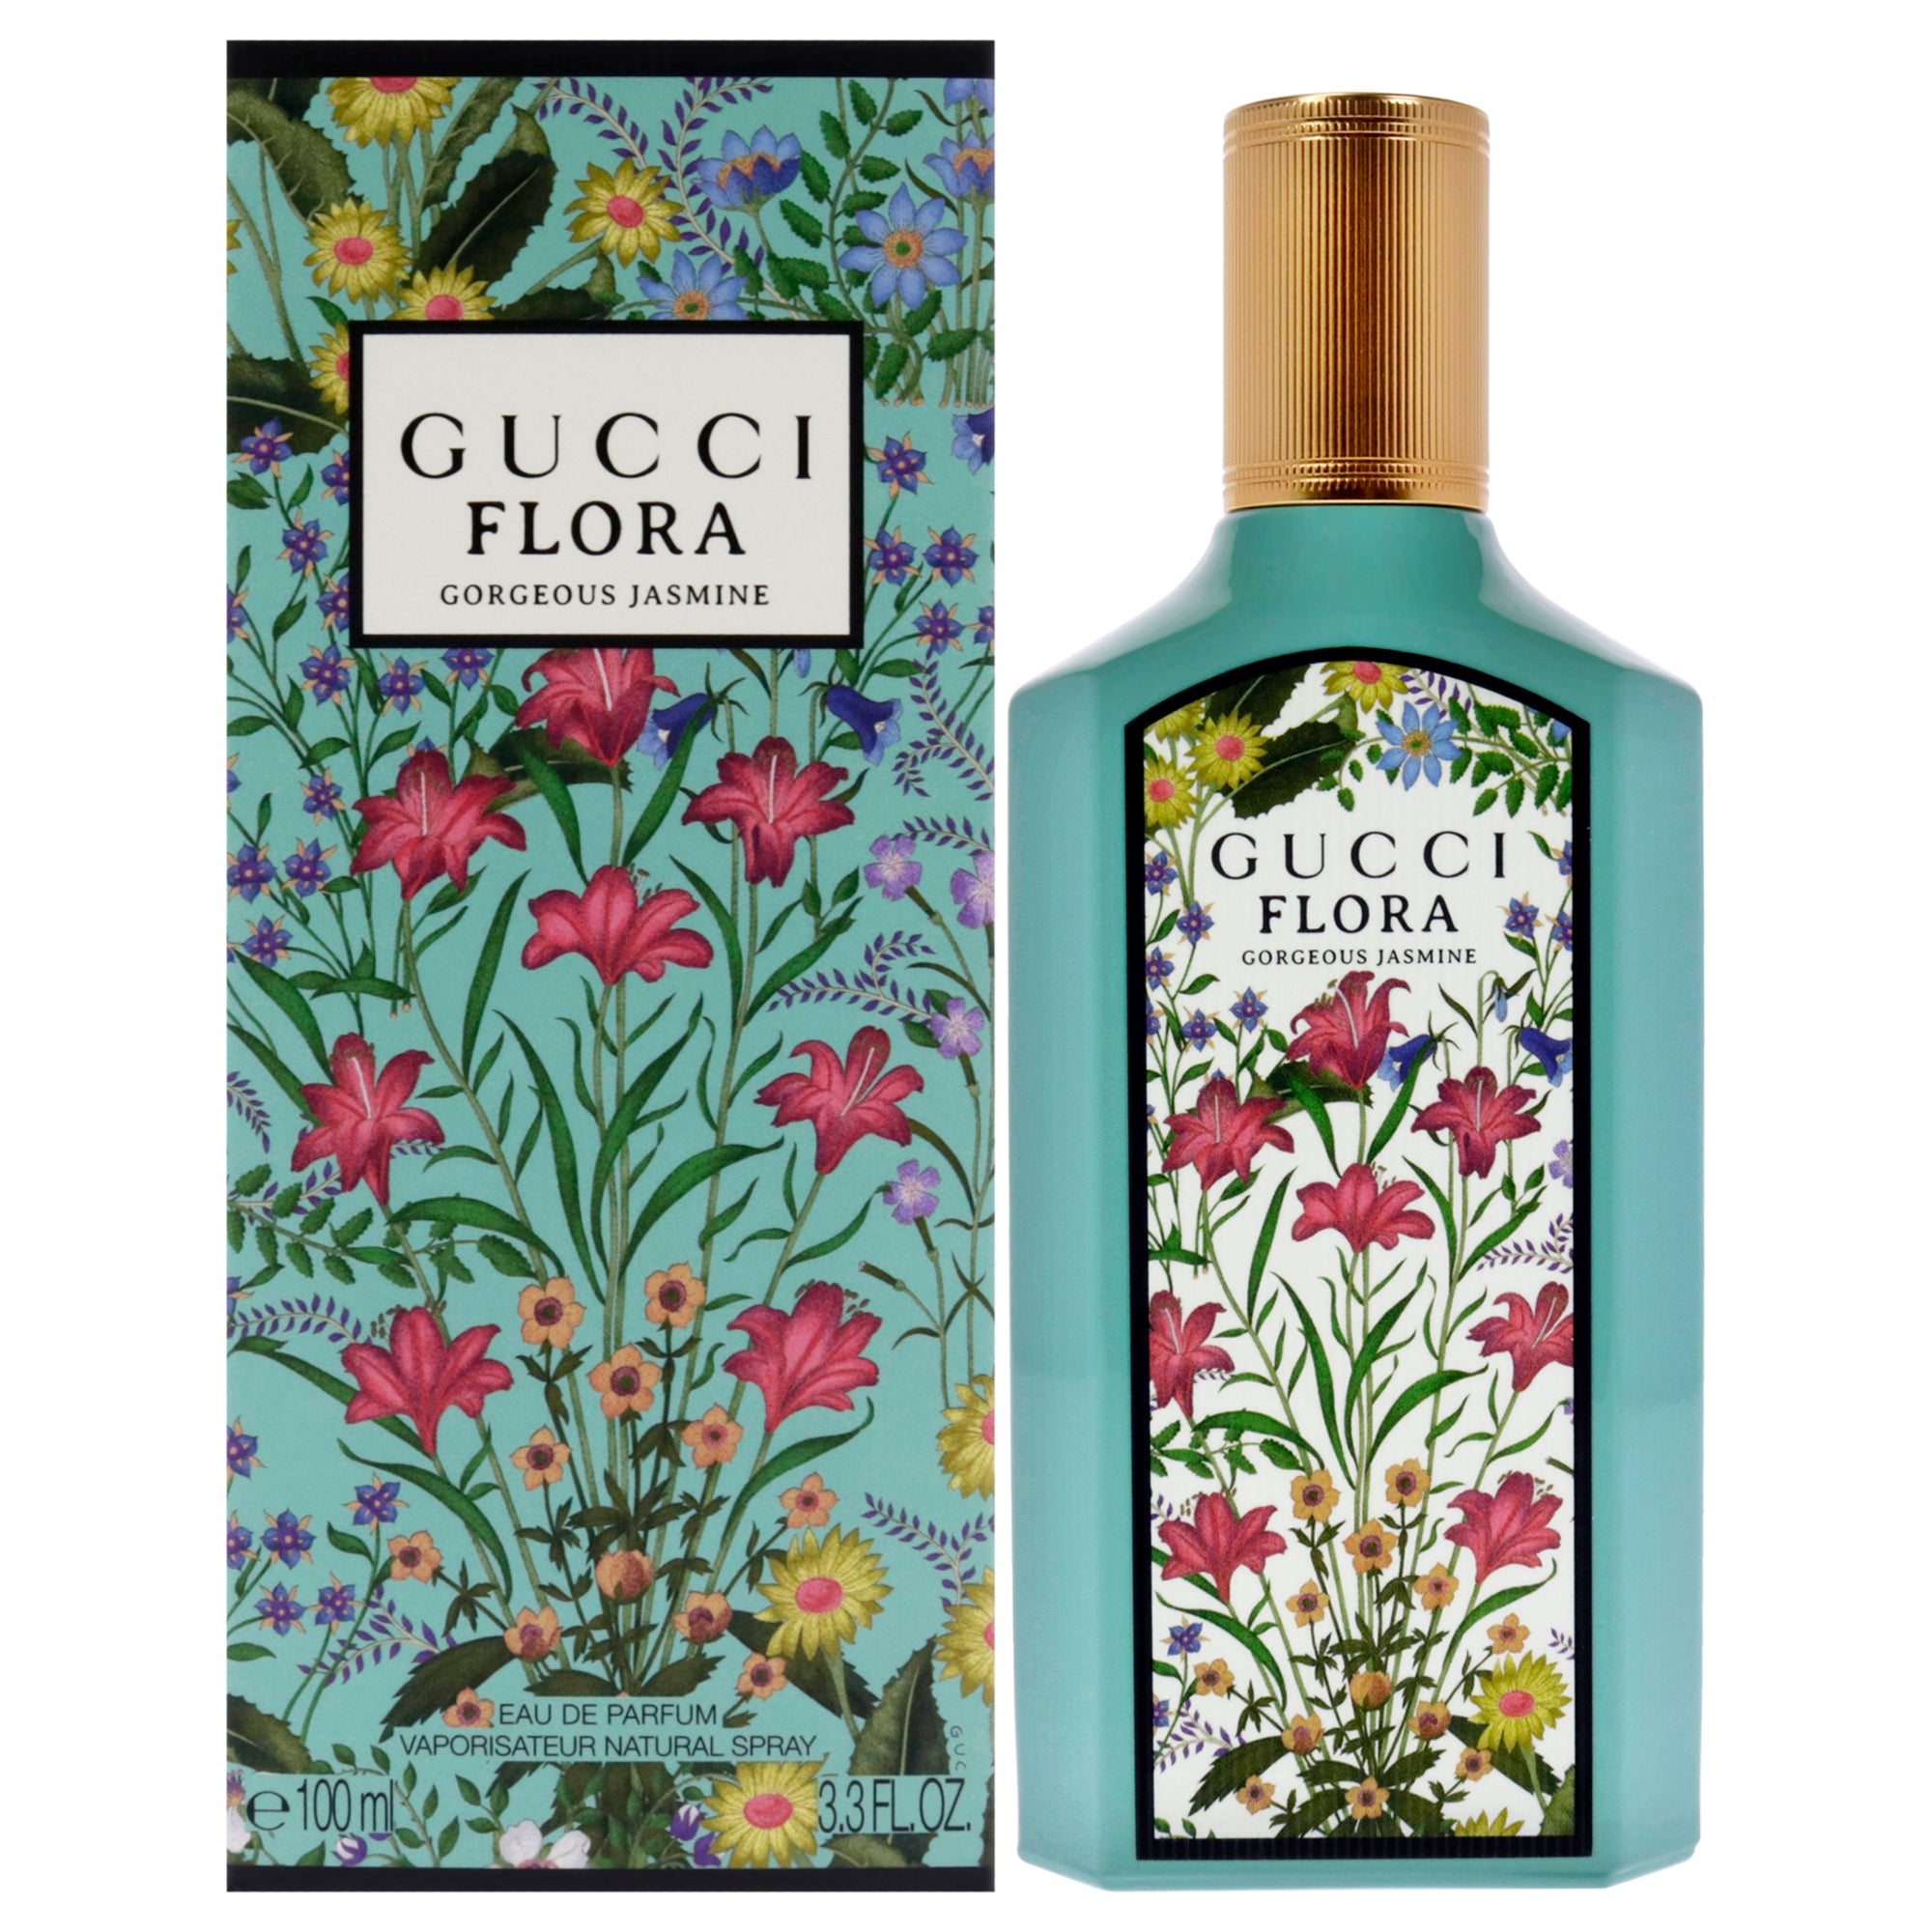 Flora Gorgeous Jasmine by Gucci for Women - 3.3 oz EDP Spray